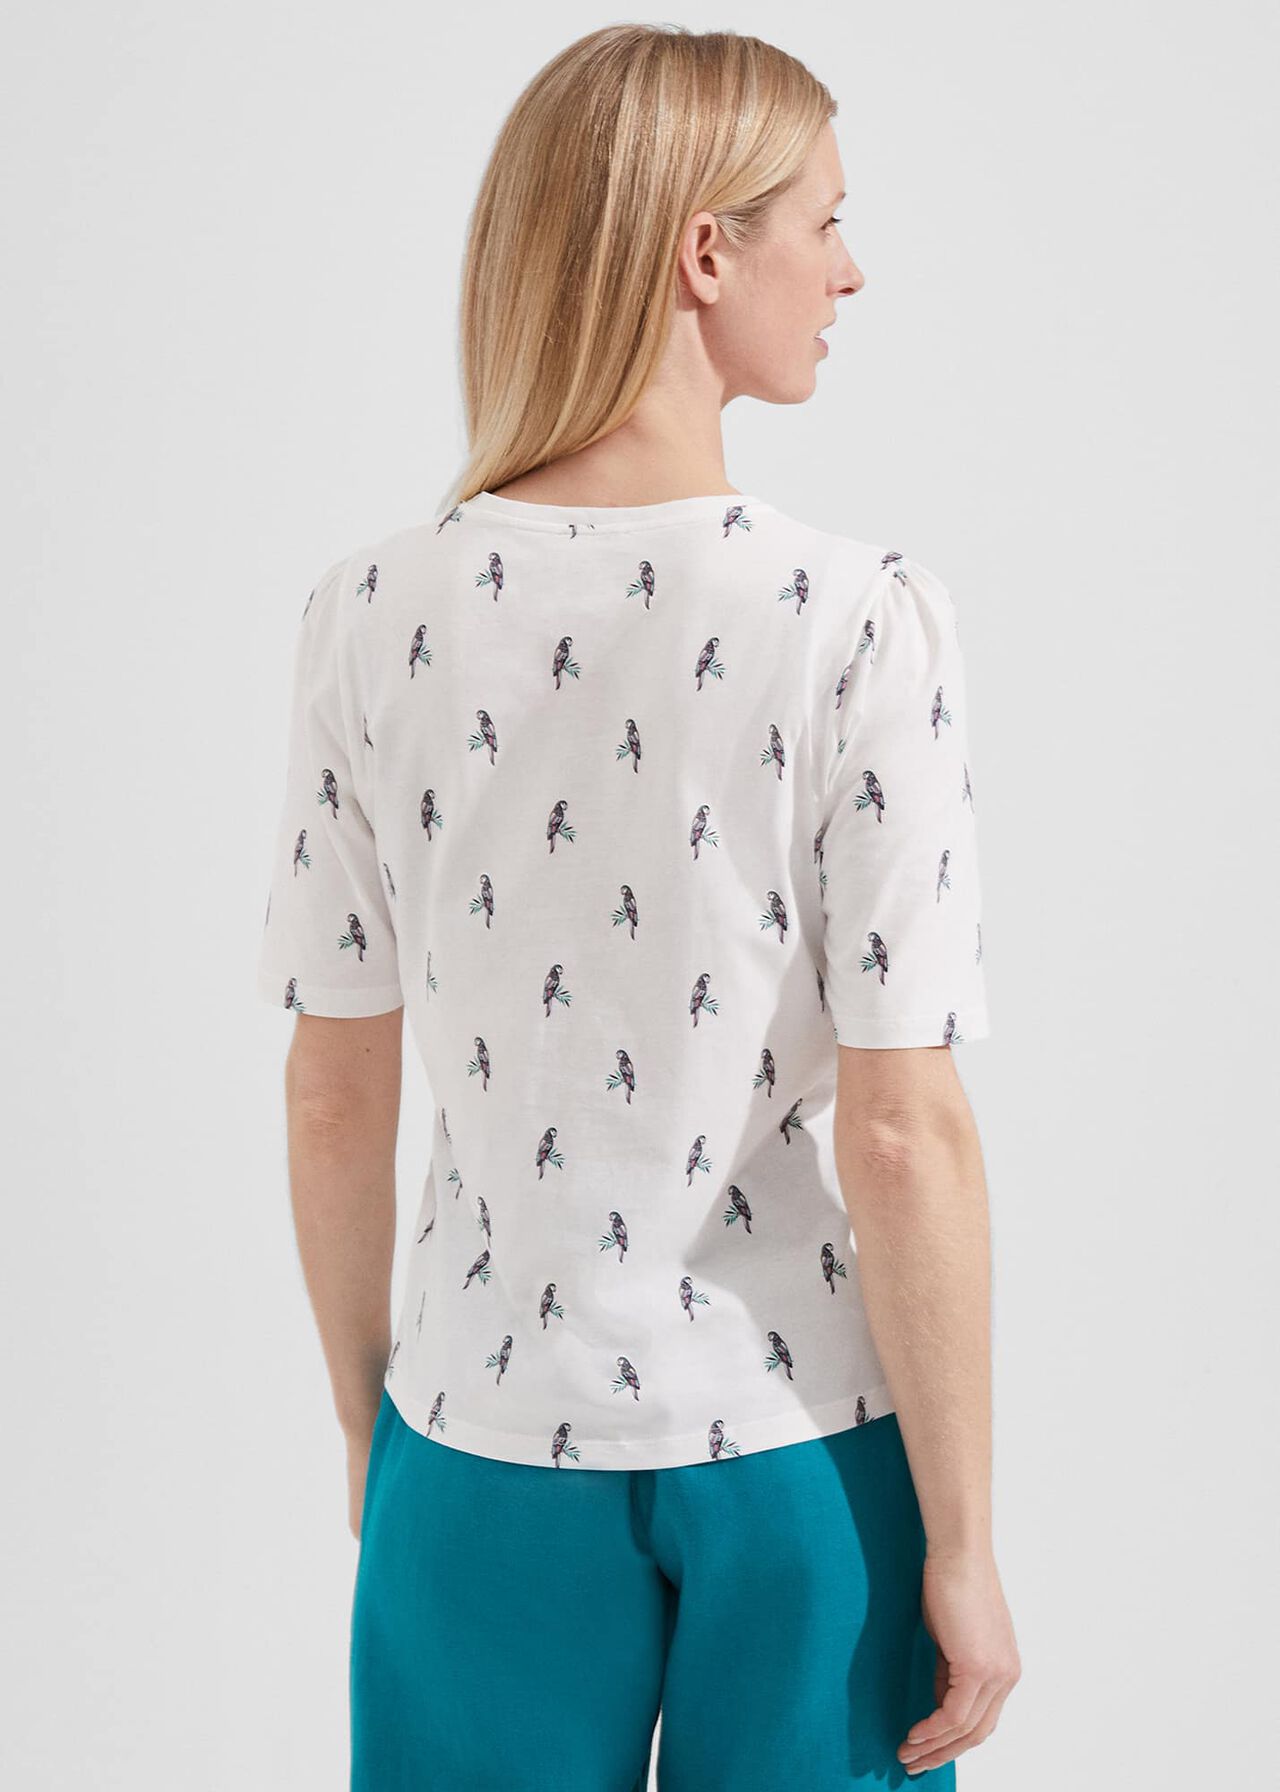 Eva Cotton Printed T-Shirt, White Navy, hi-res